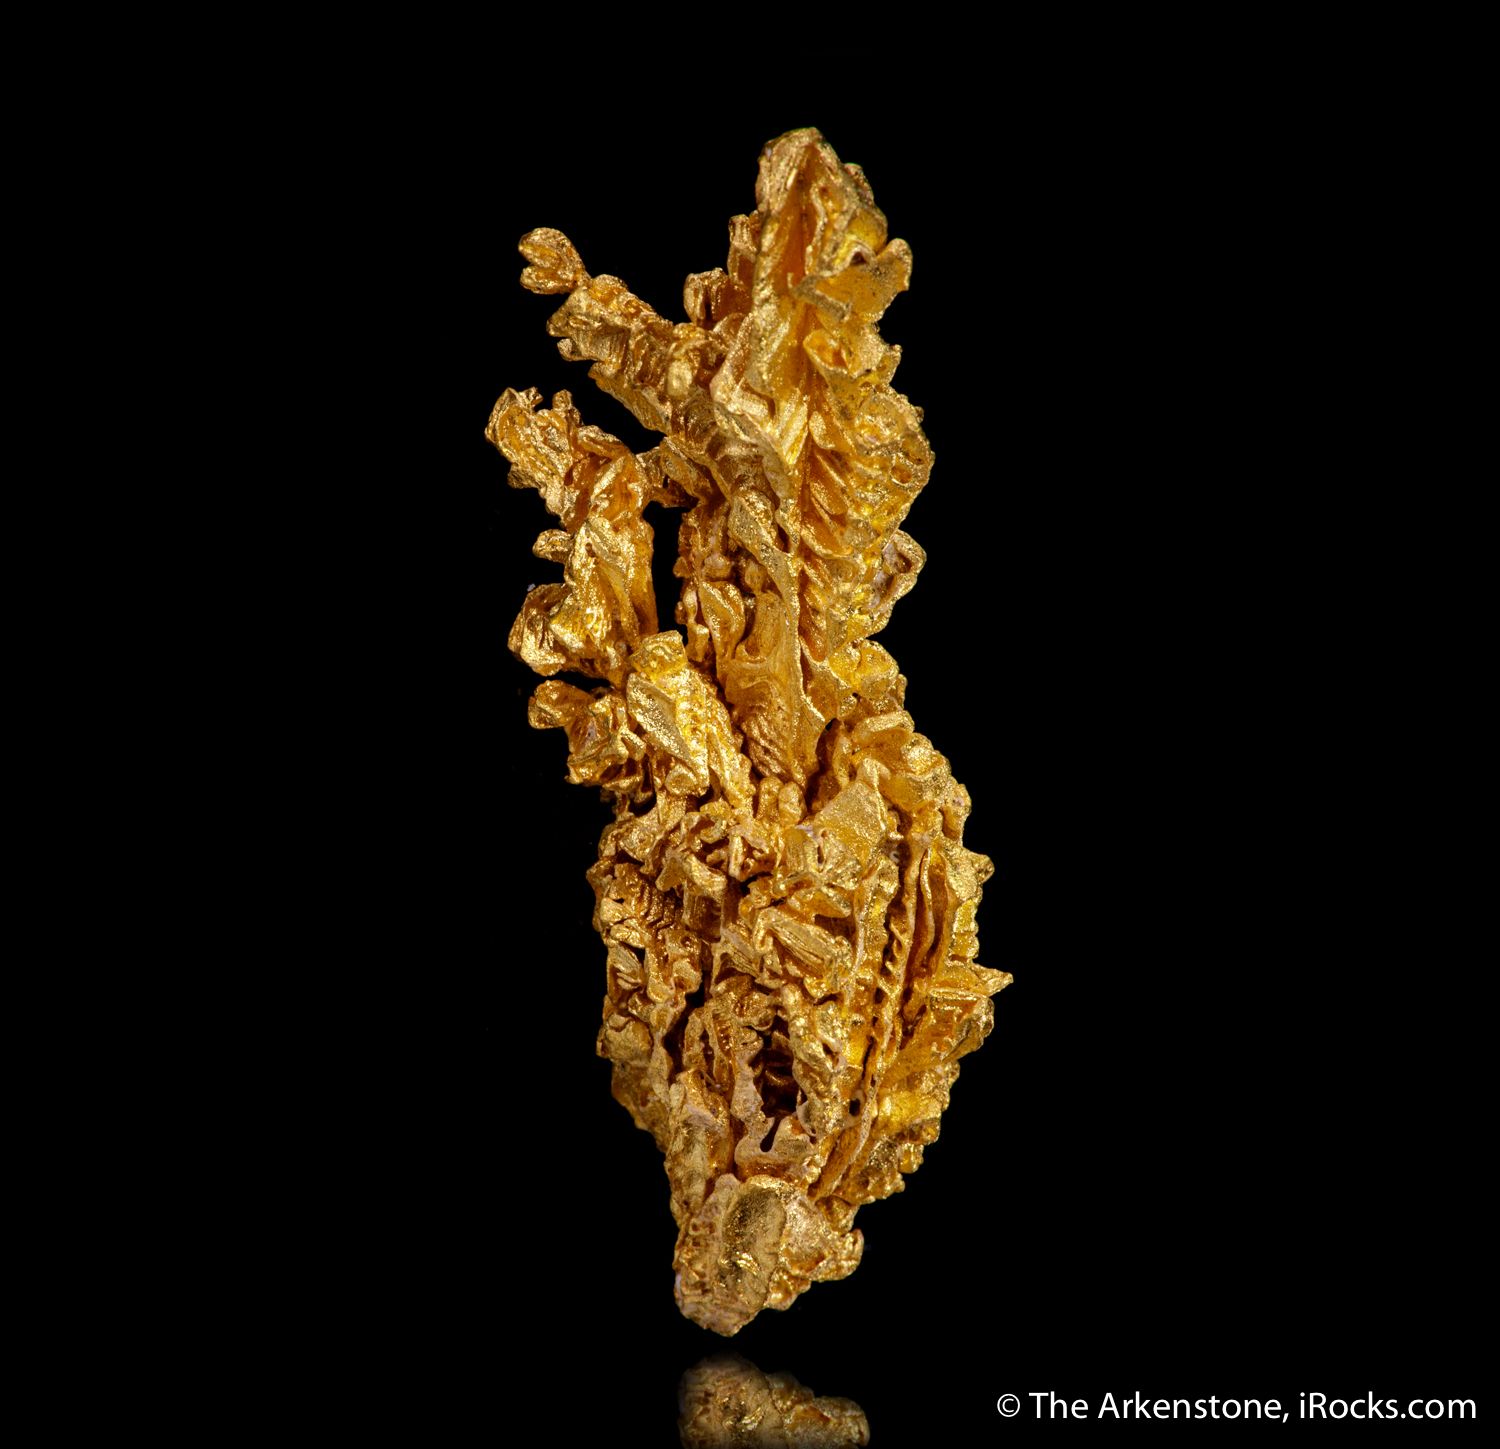 Gold - GOLD21-02 - Pontes e Lacerda - Brazil Mineral Specimen